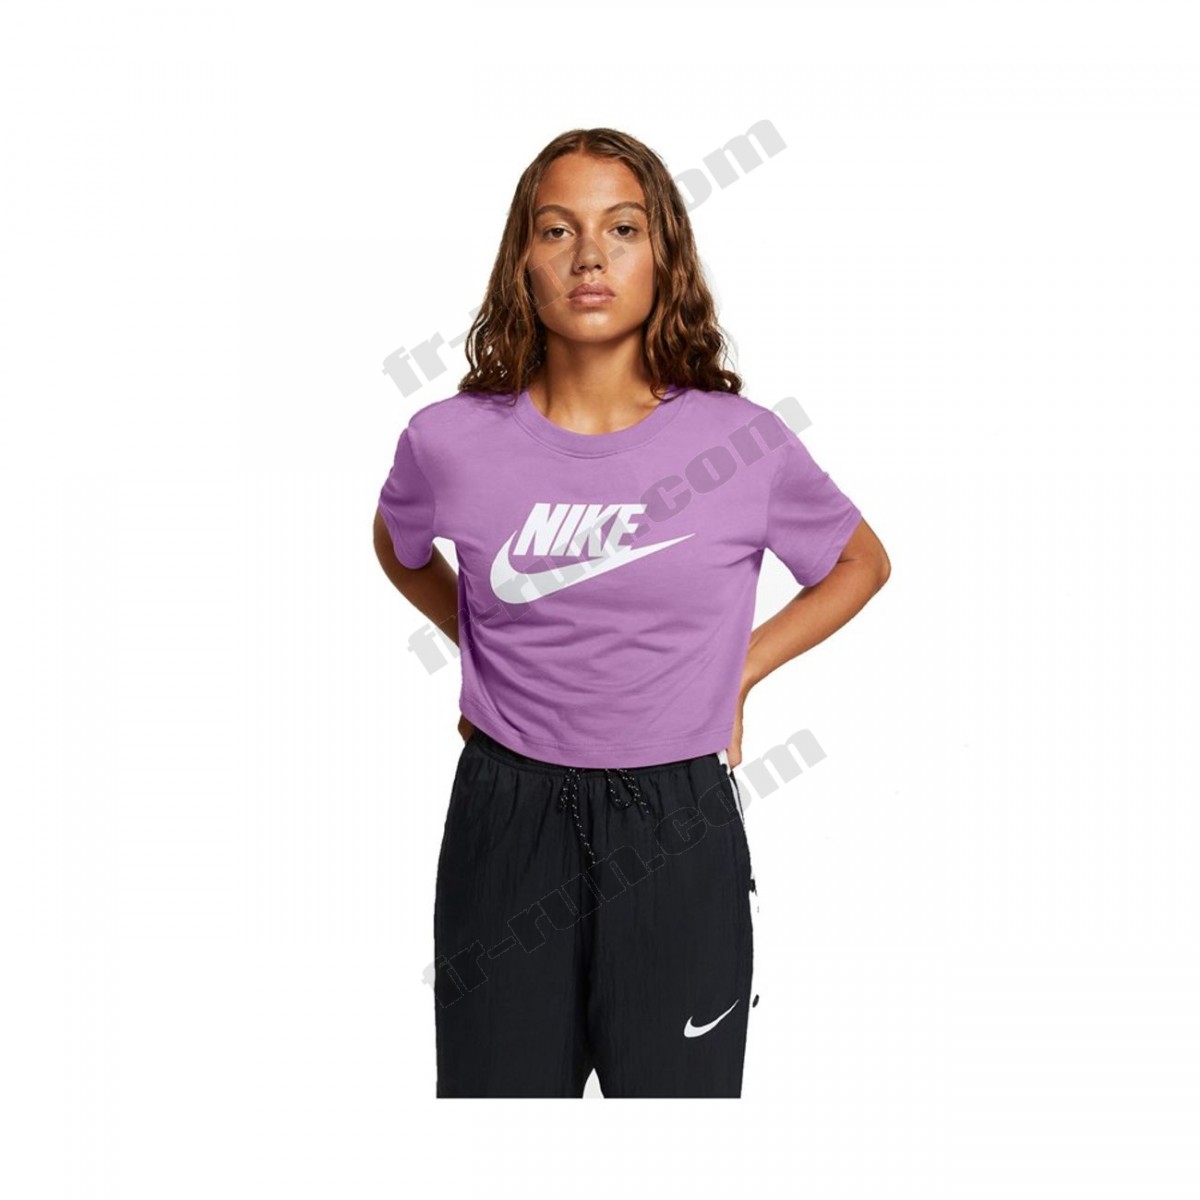 Nike/running femme NIKE Nike Wmns Essential ◇◇◇ Pas Cher Du Tout - -1